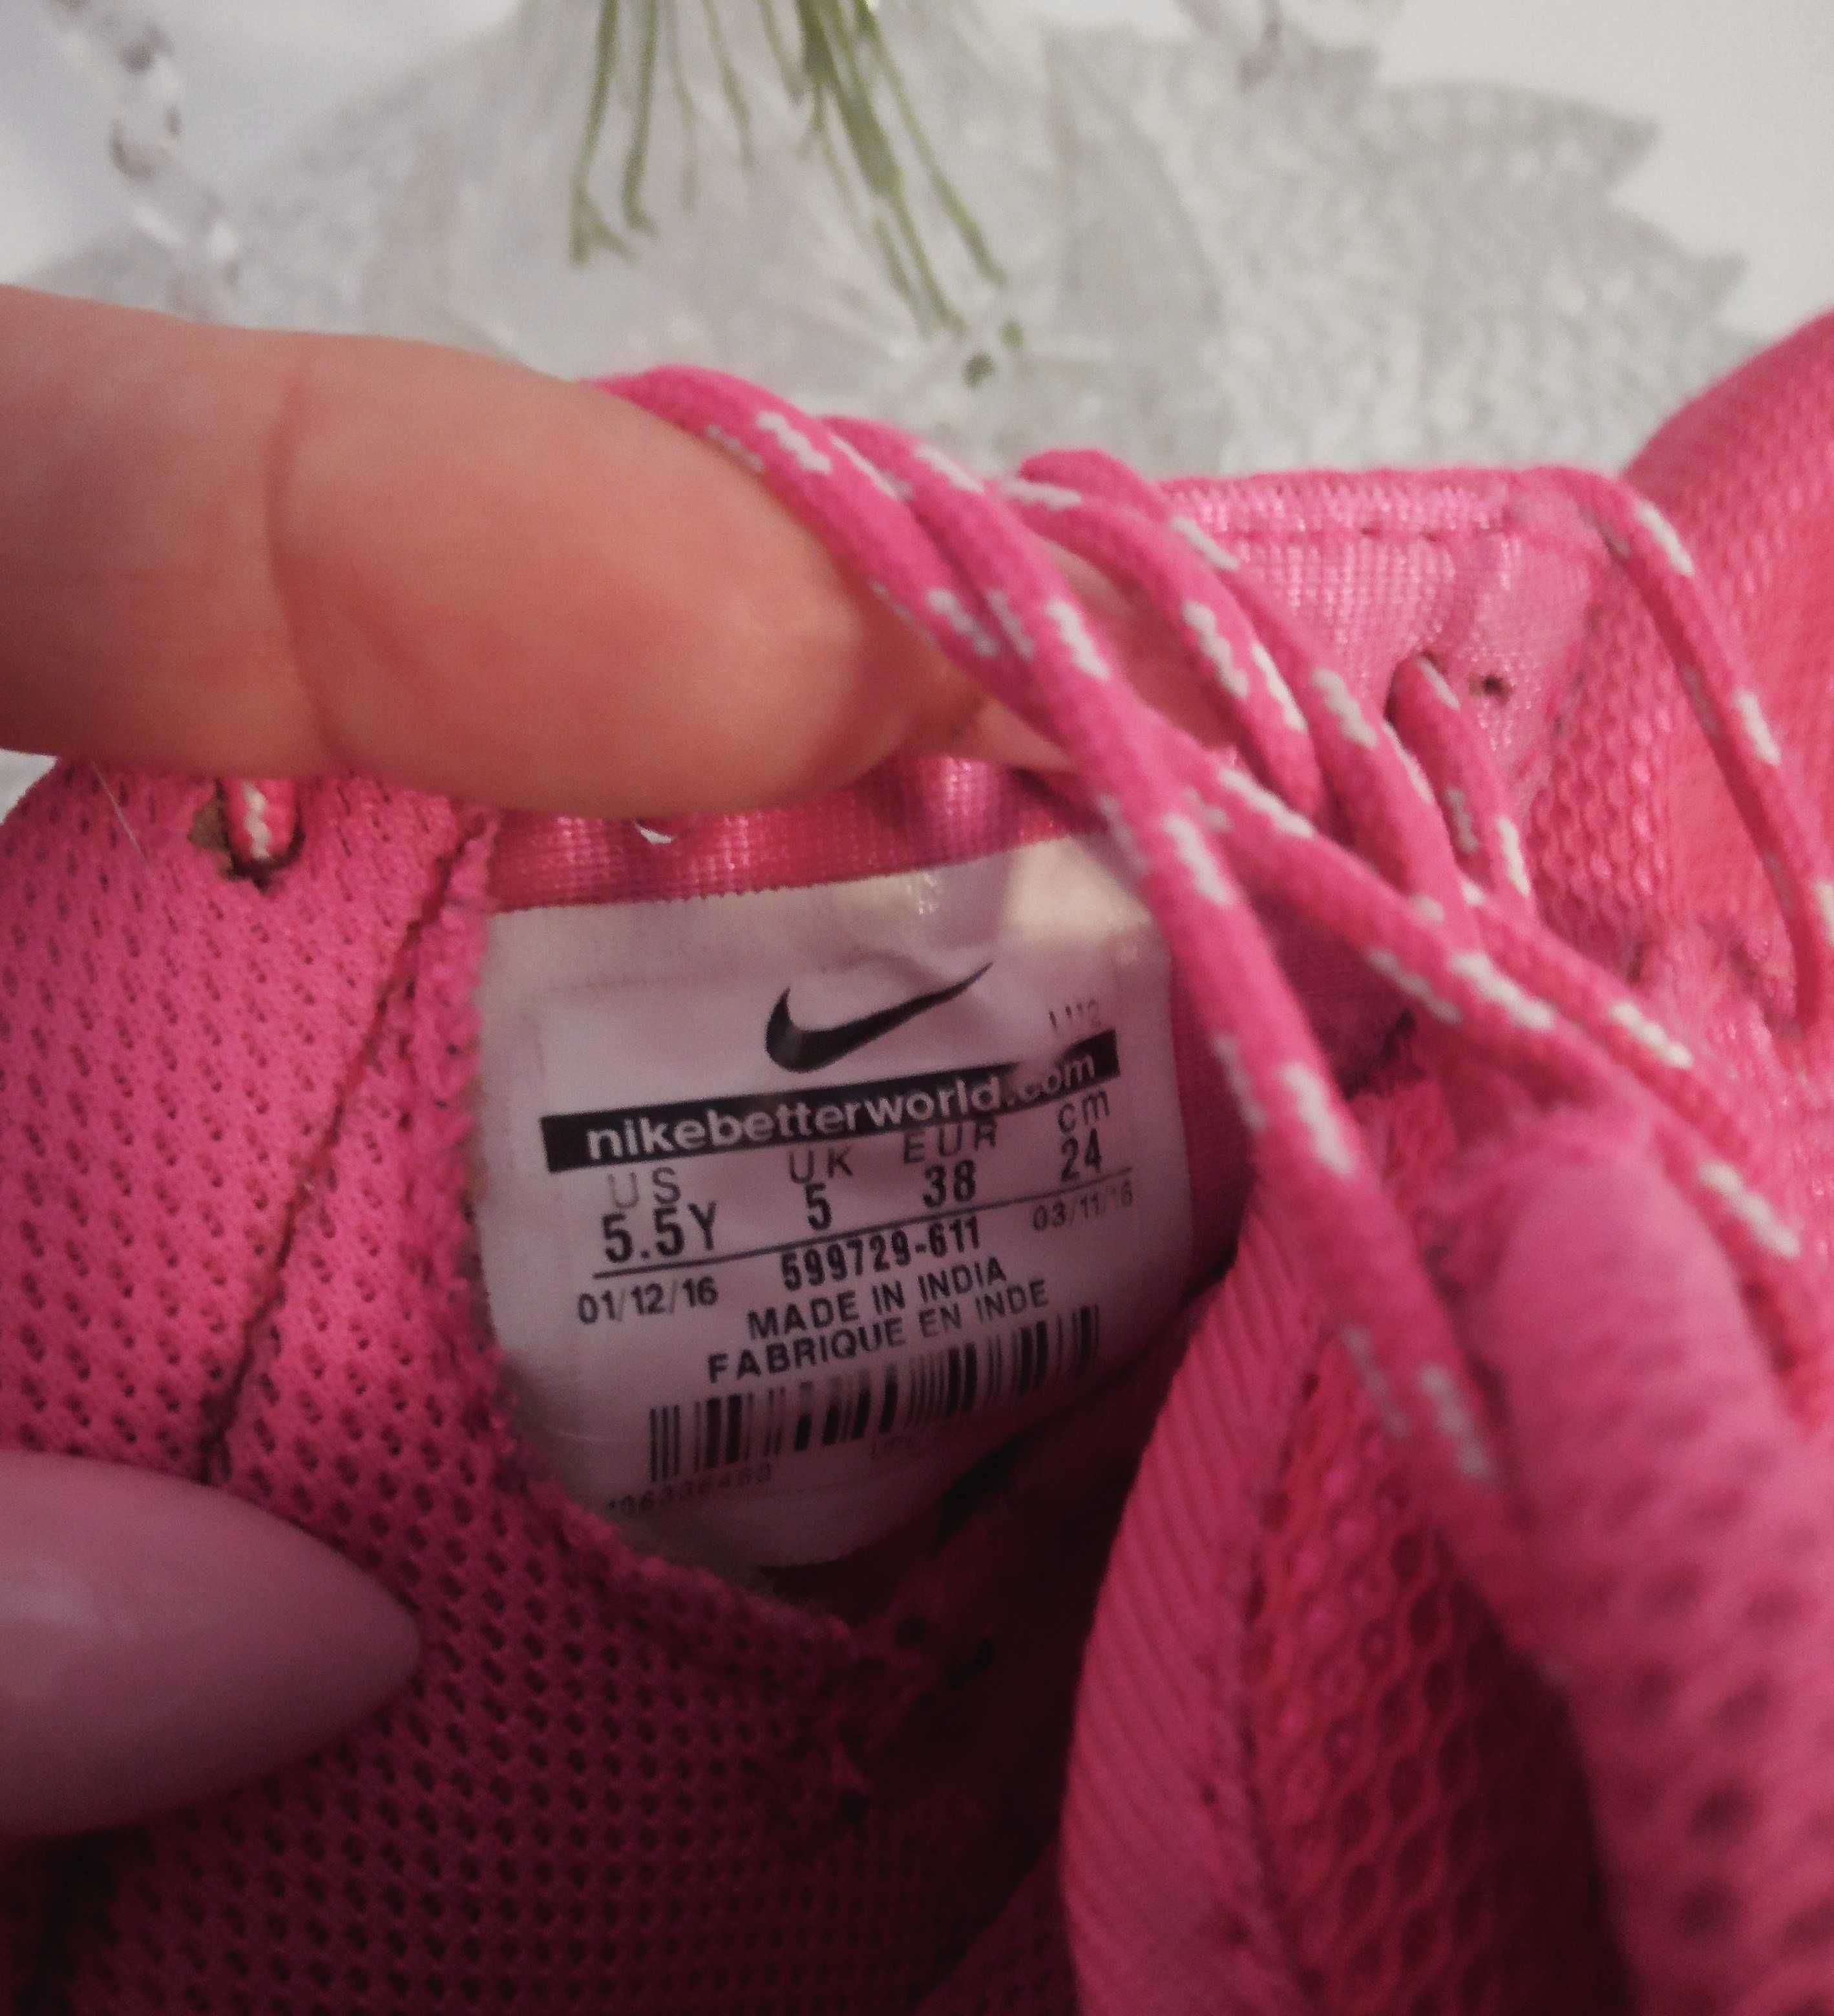 Buty Nike Roshe Run Róż neon 38 , 24 cm